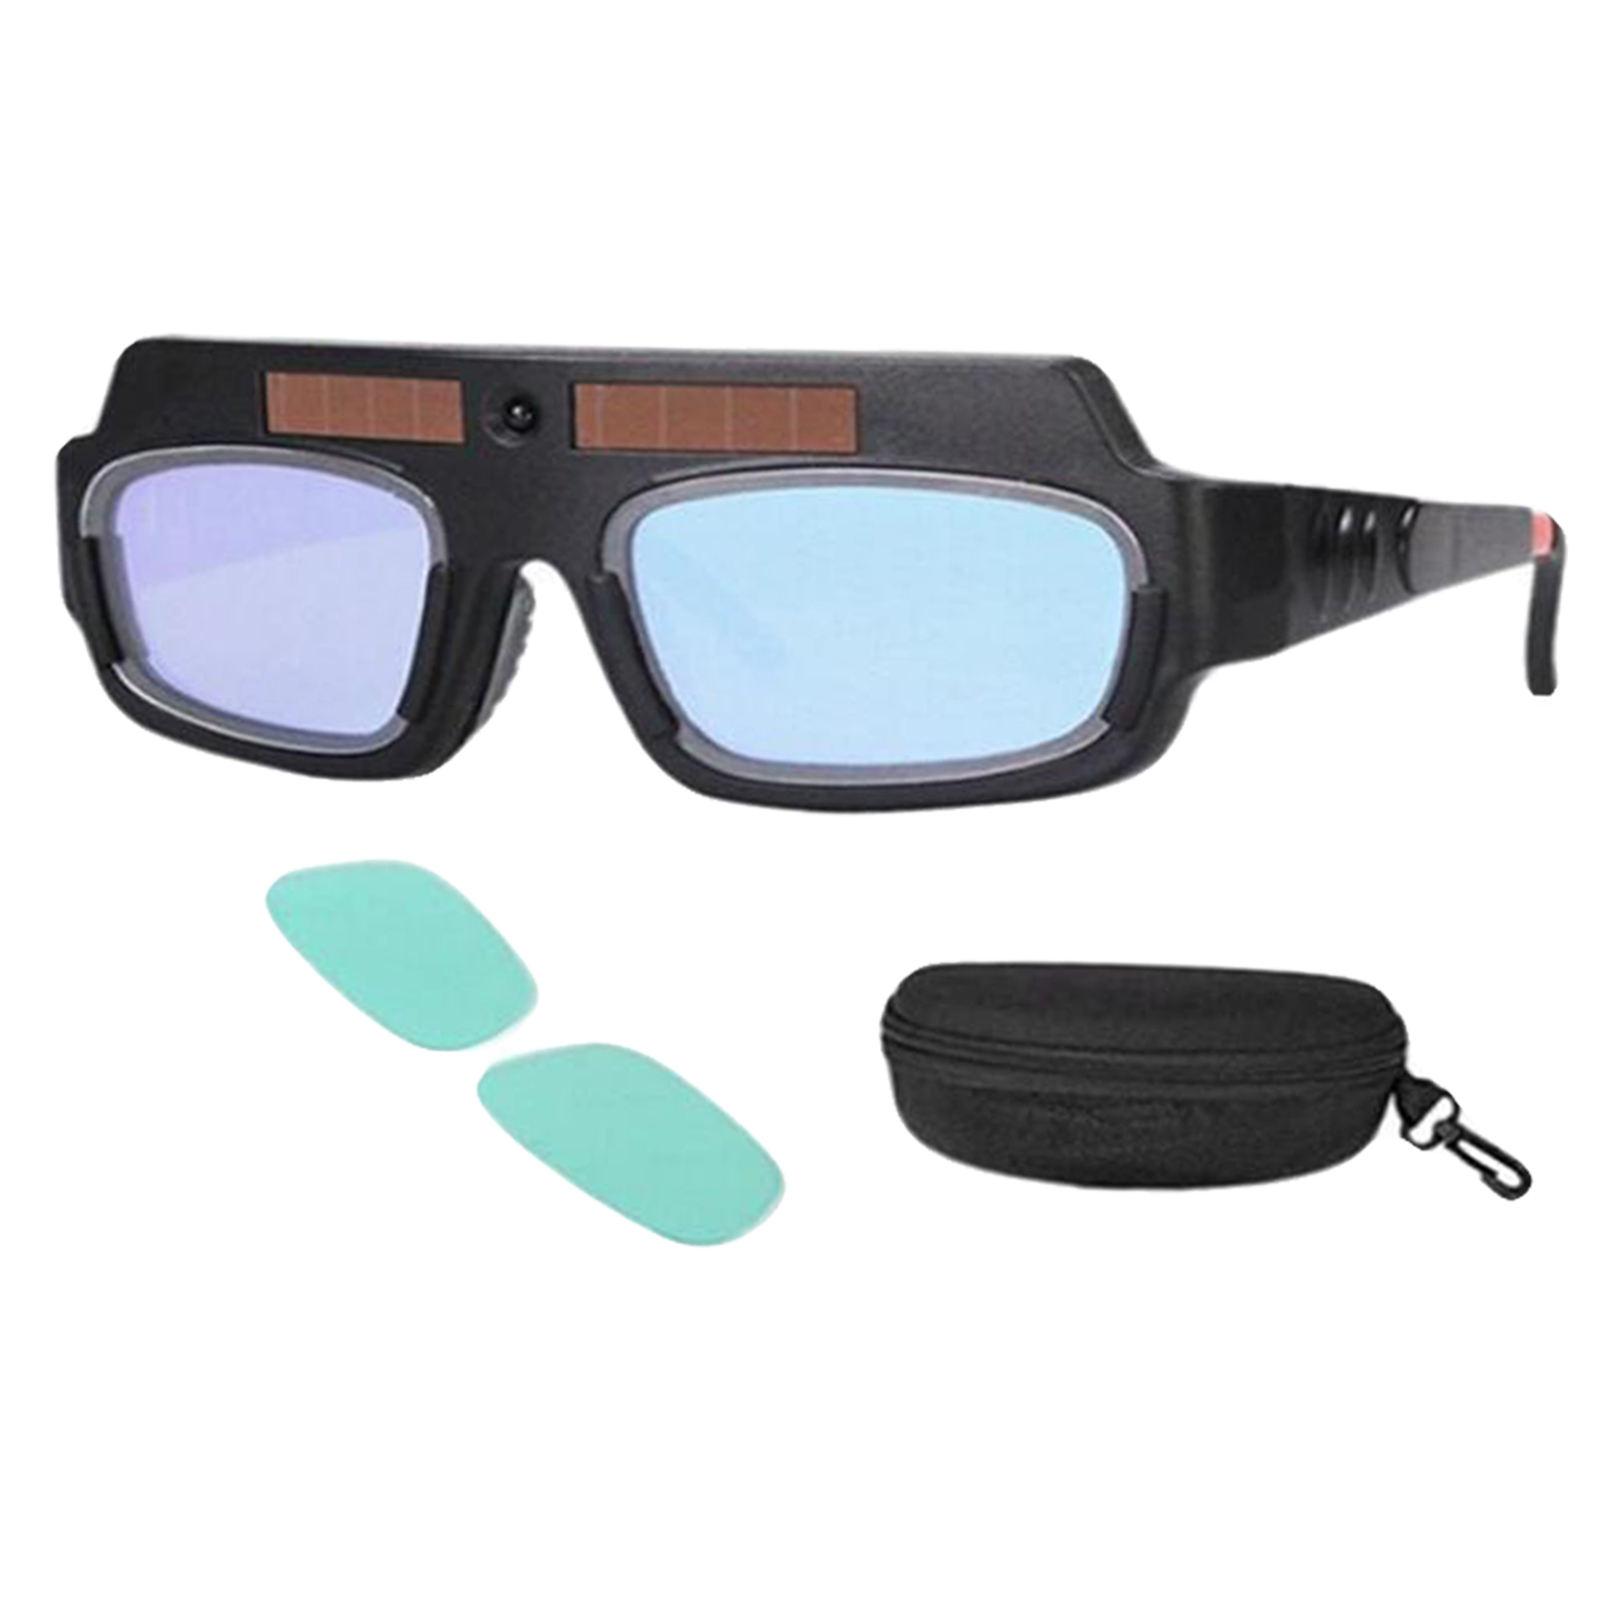 Auto Darkening Welding Goggles Eye Protection Solar Powered Welder Glasses